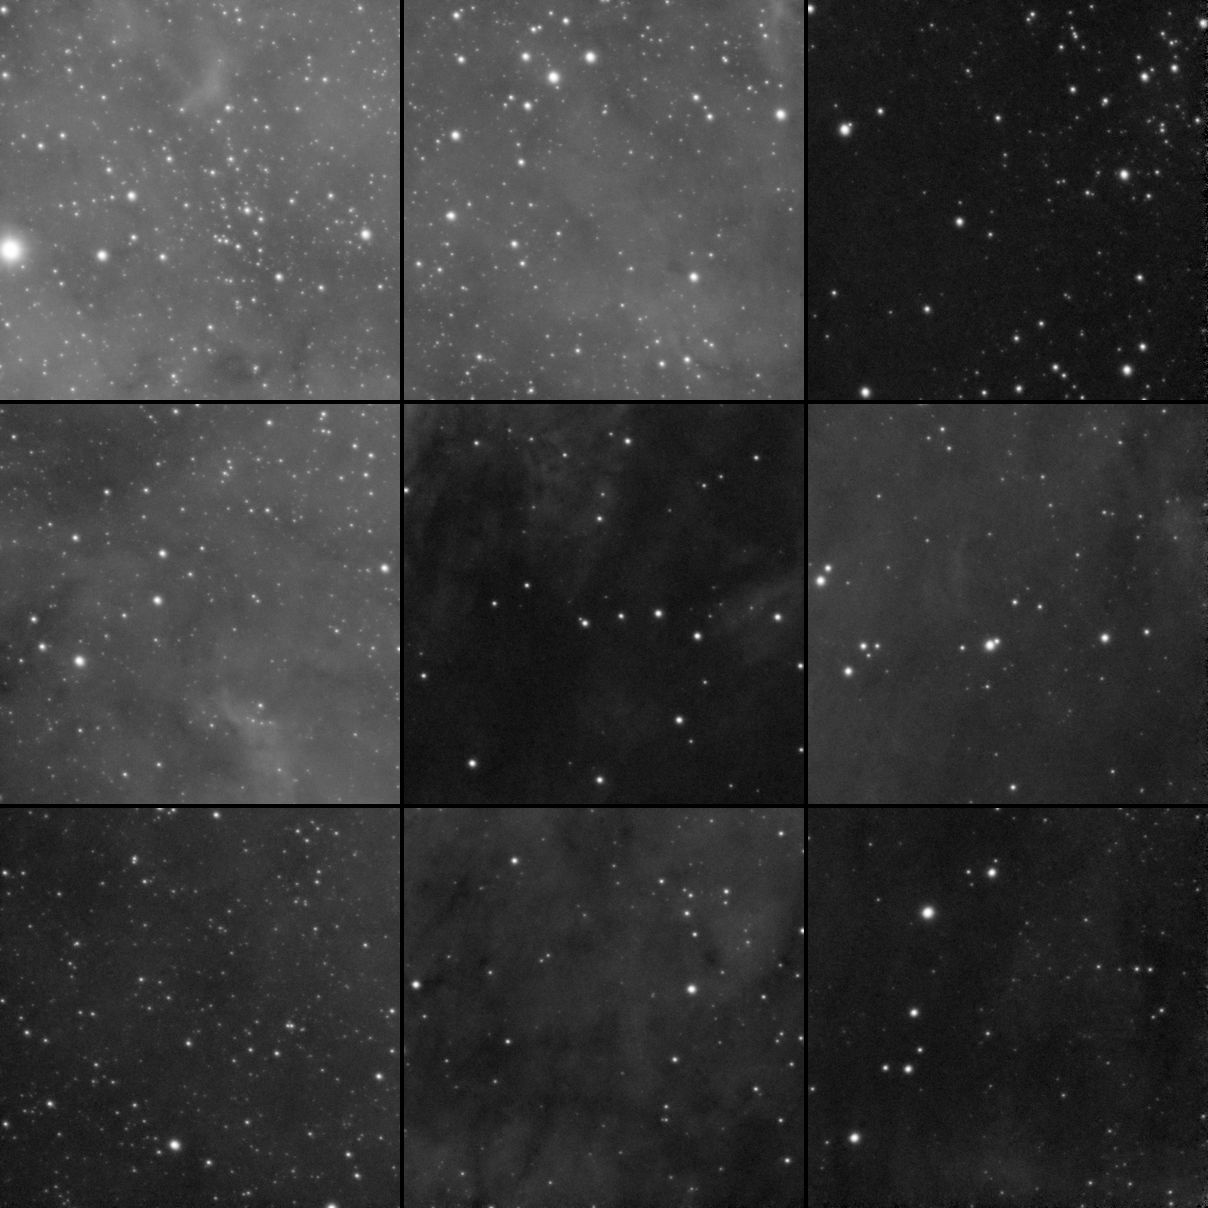 NGC_7000_stack_Ha_processed_mosaic.jpg.88e02a779e19ca1d4d605d0701f6619c.jpg